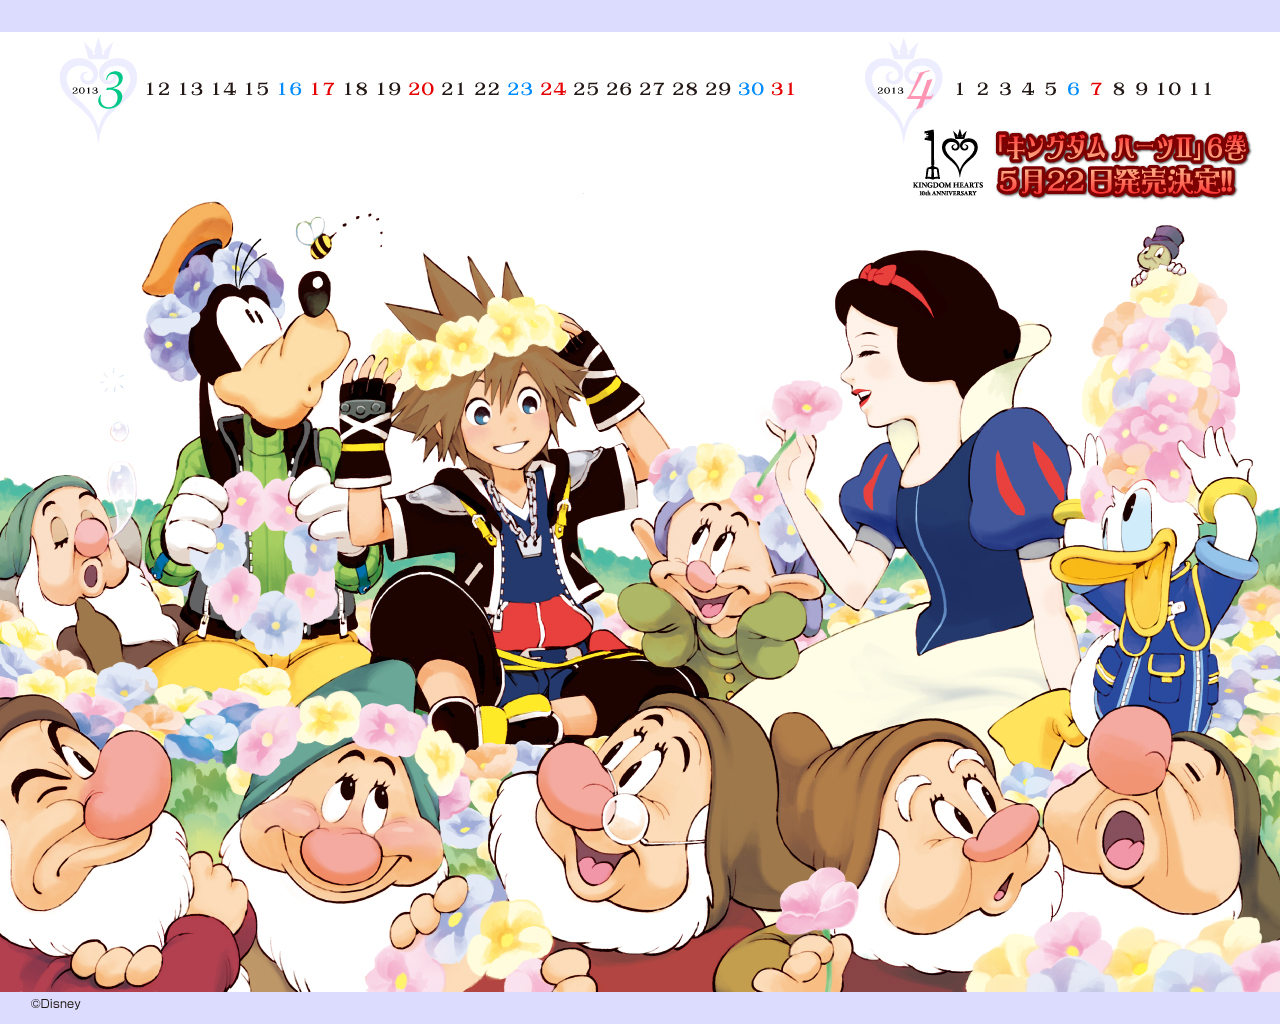 KINGDOM HEARTS 10th Anniversary Wallpaper 8! News Kingdom Hearts